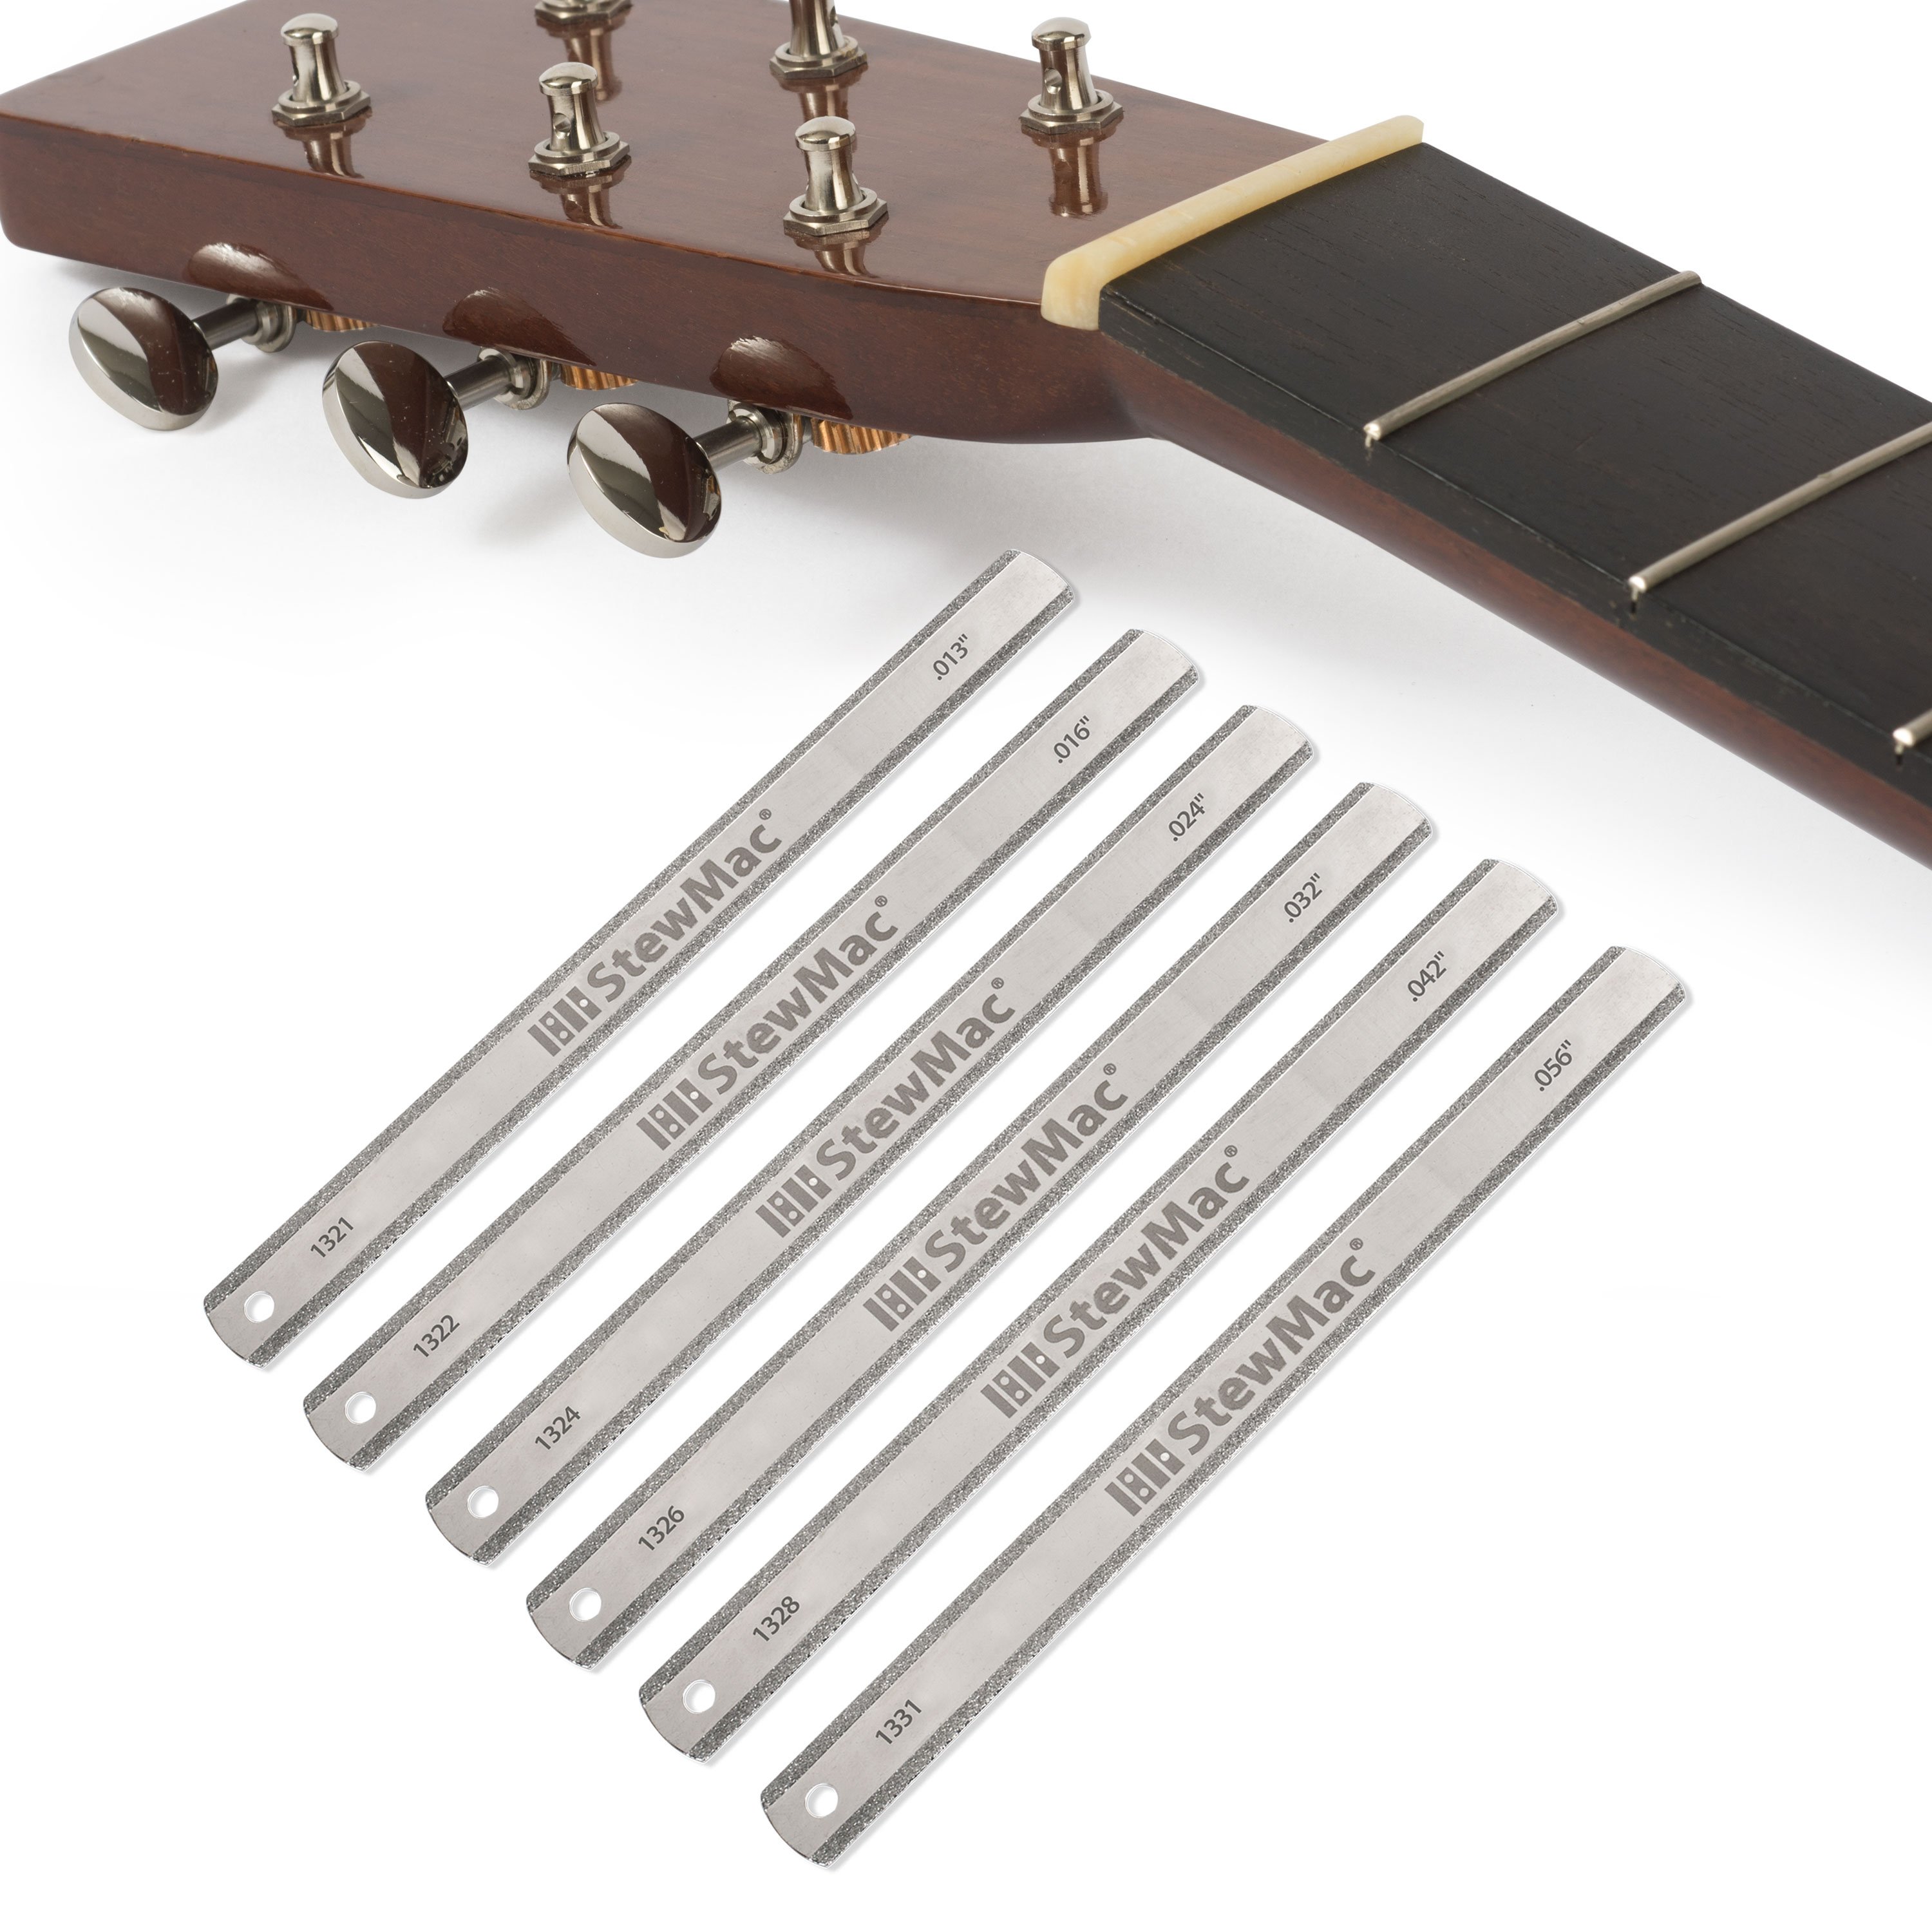 https://www.stewmac.com/globalassets/product-images/m003000/m003100/m003109-gauged-diamondcut-nut-slotting-file-set-for-acoustic-guitar/2328-1-3000.jpg?hash=637613053220000000